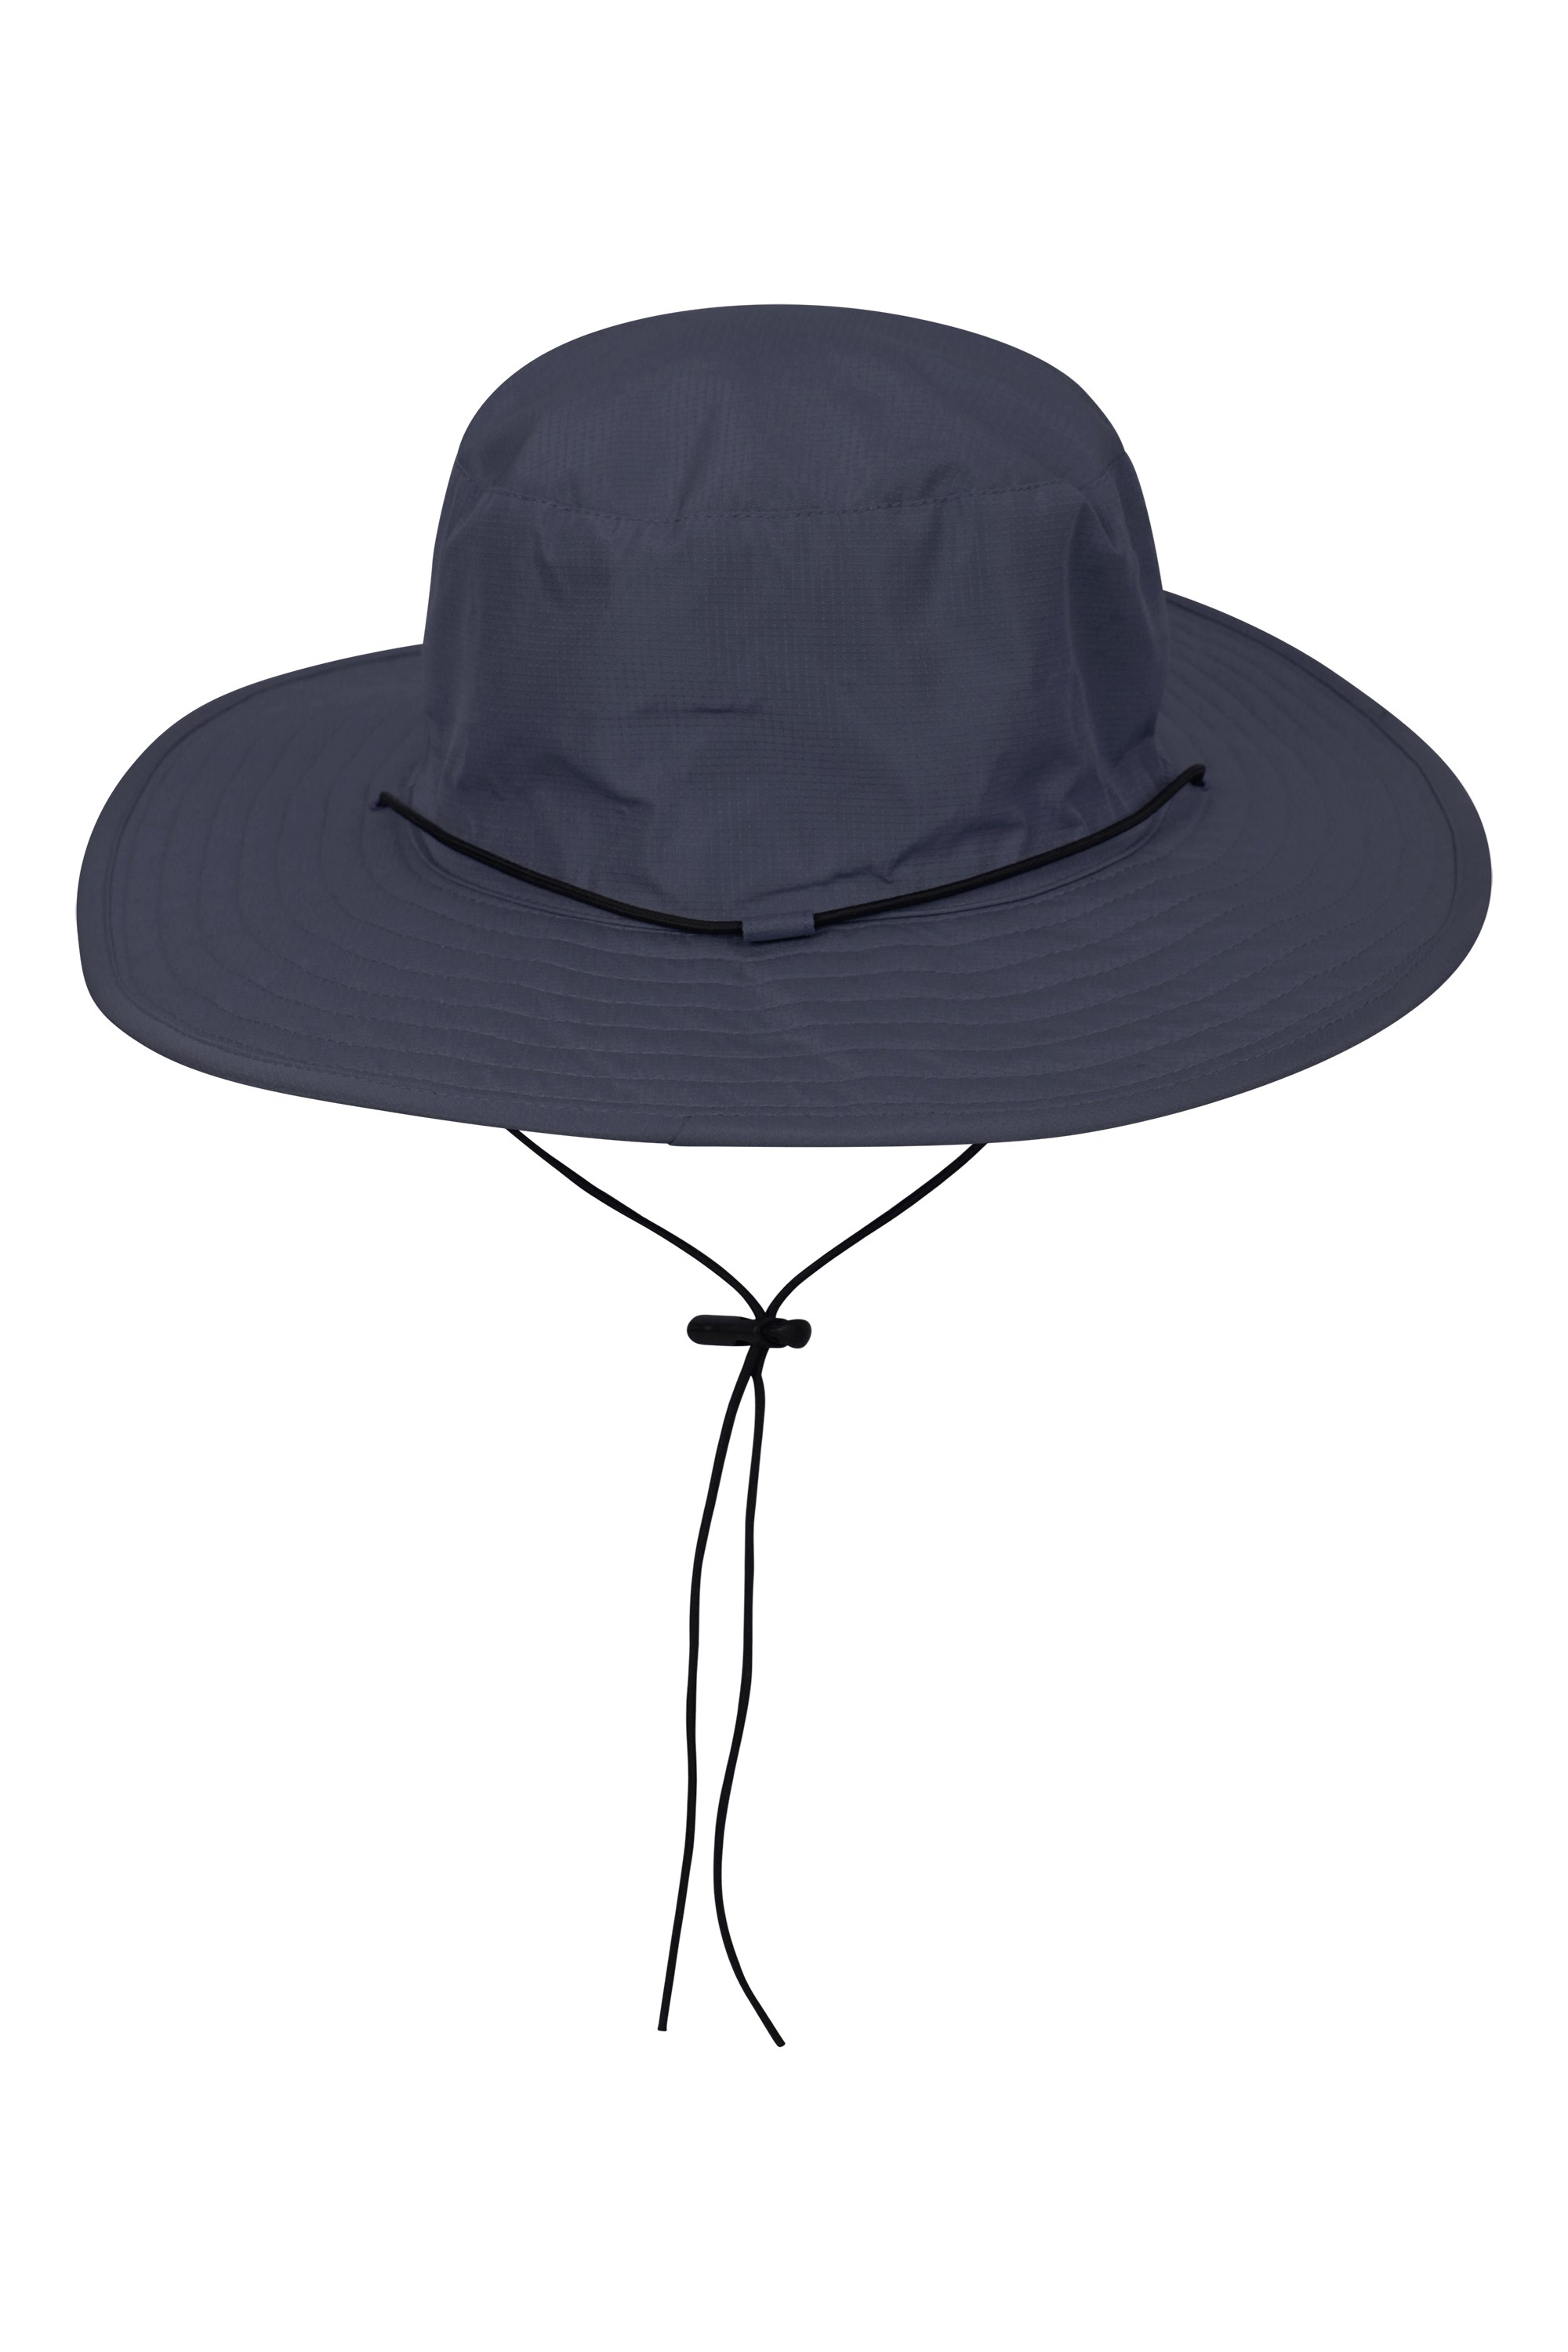 Mountain Warehouse Mens Australian Brim Hat - Beige | Size M